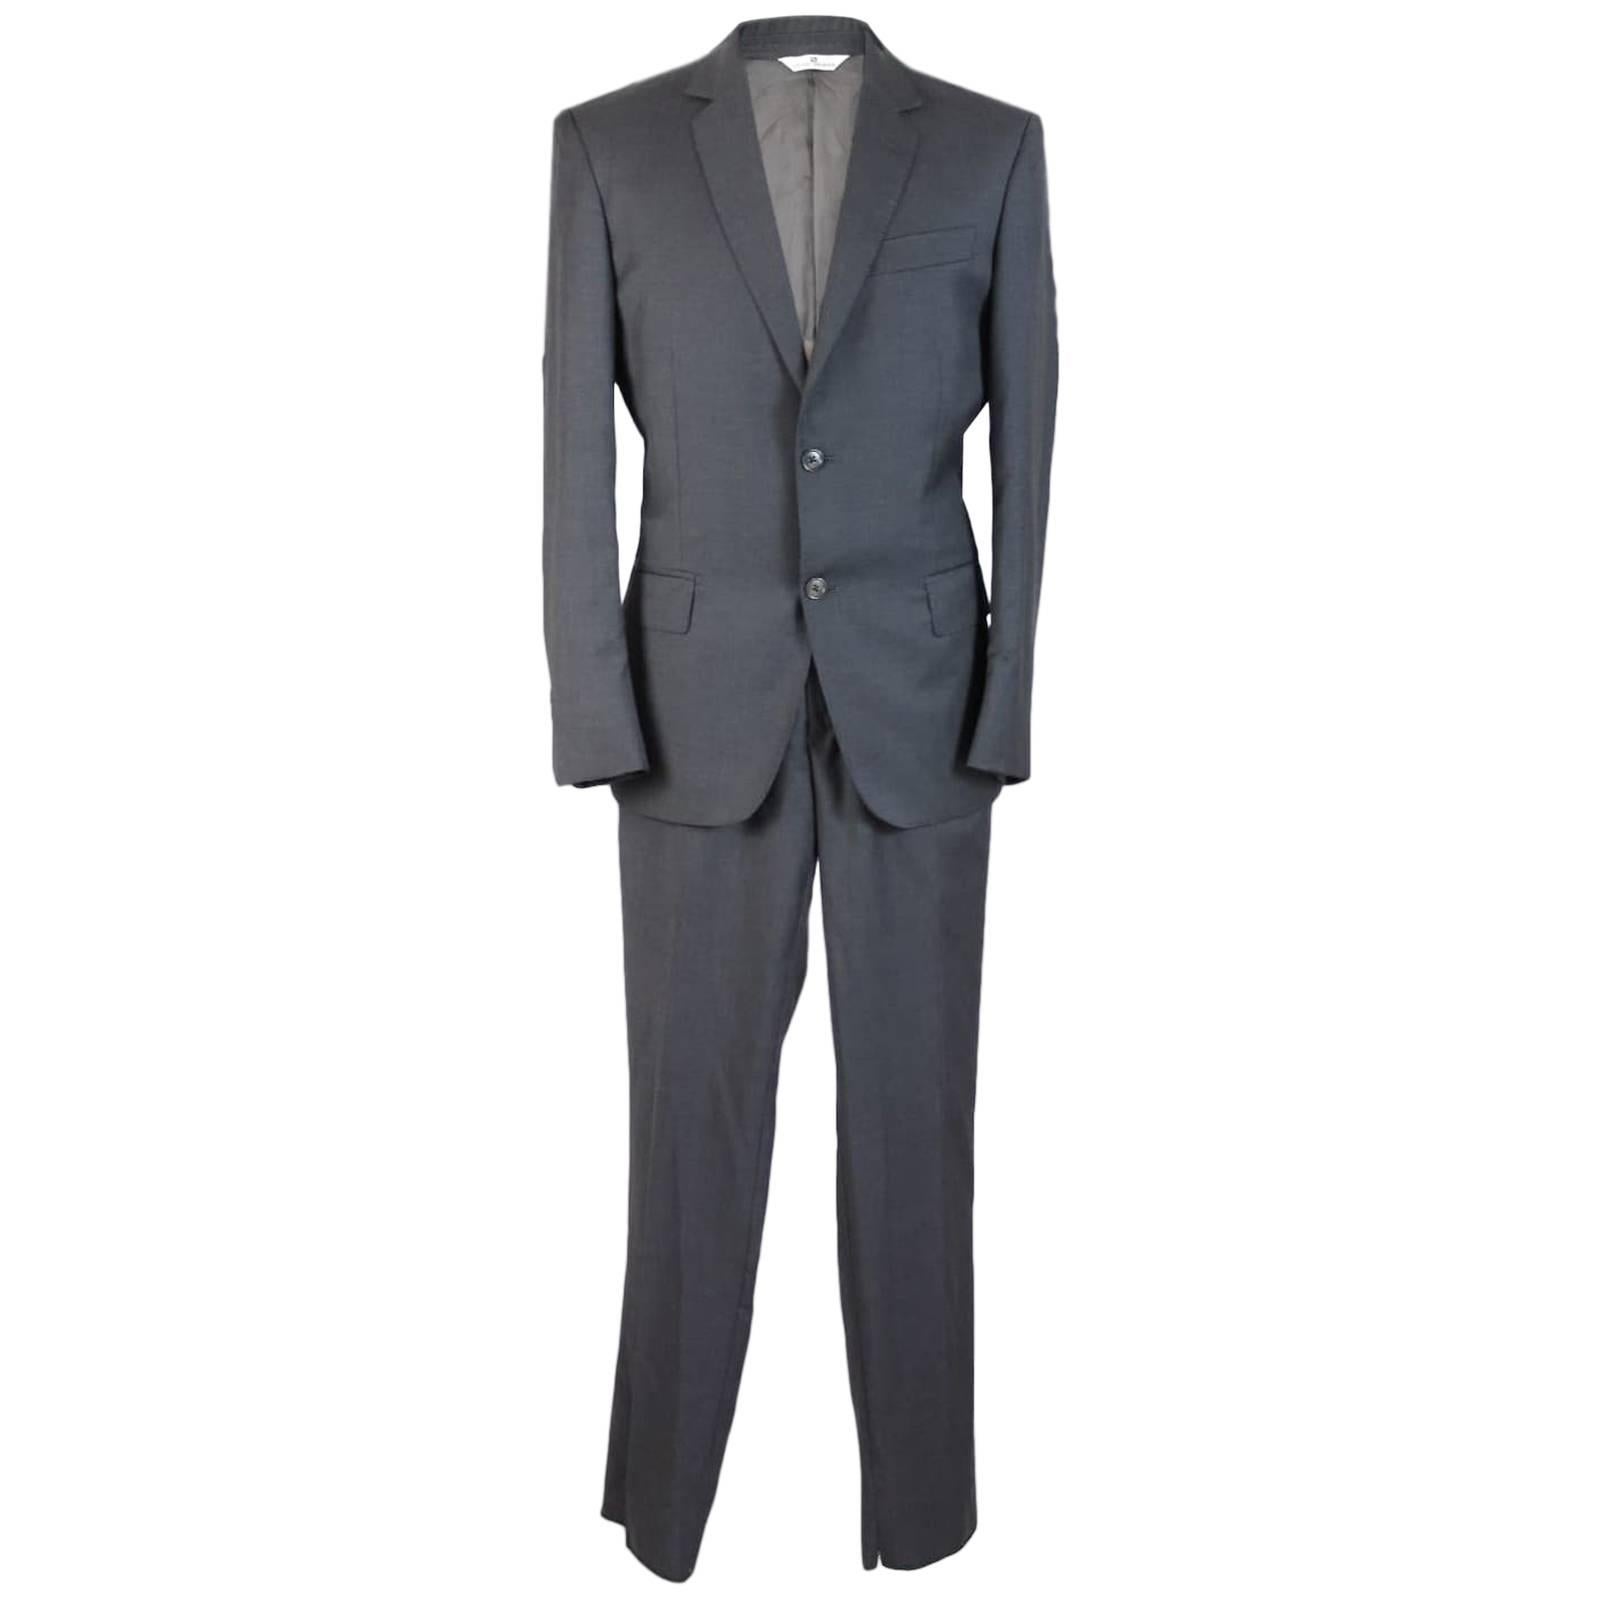 Pierre Balmain gray suit jacket wool pants trousers blazer men’s size 48 it For Sale